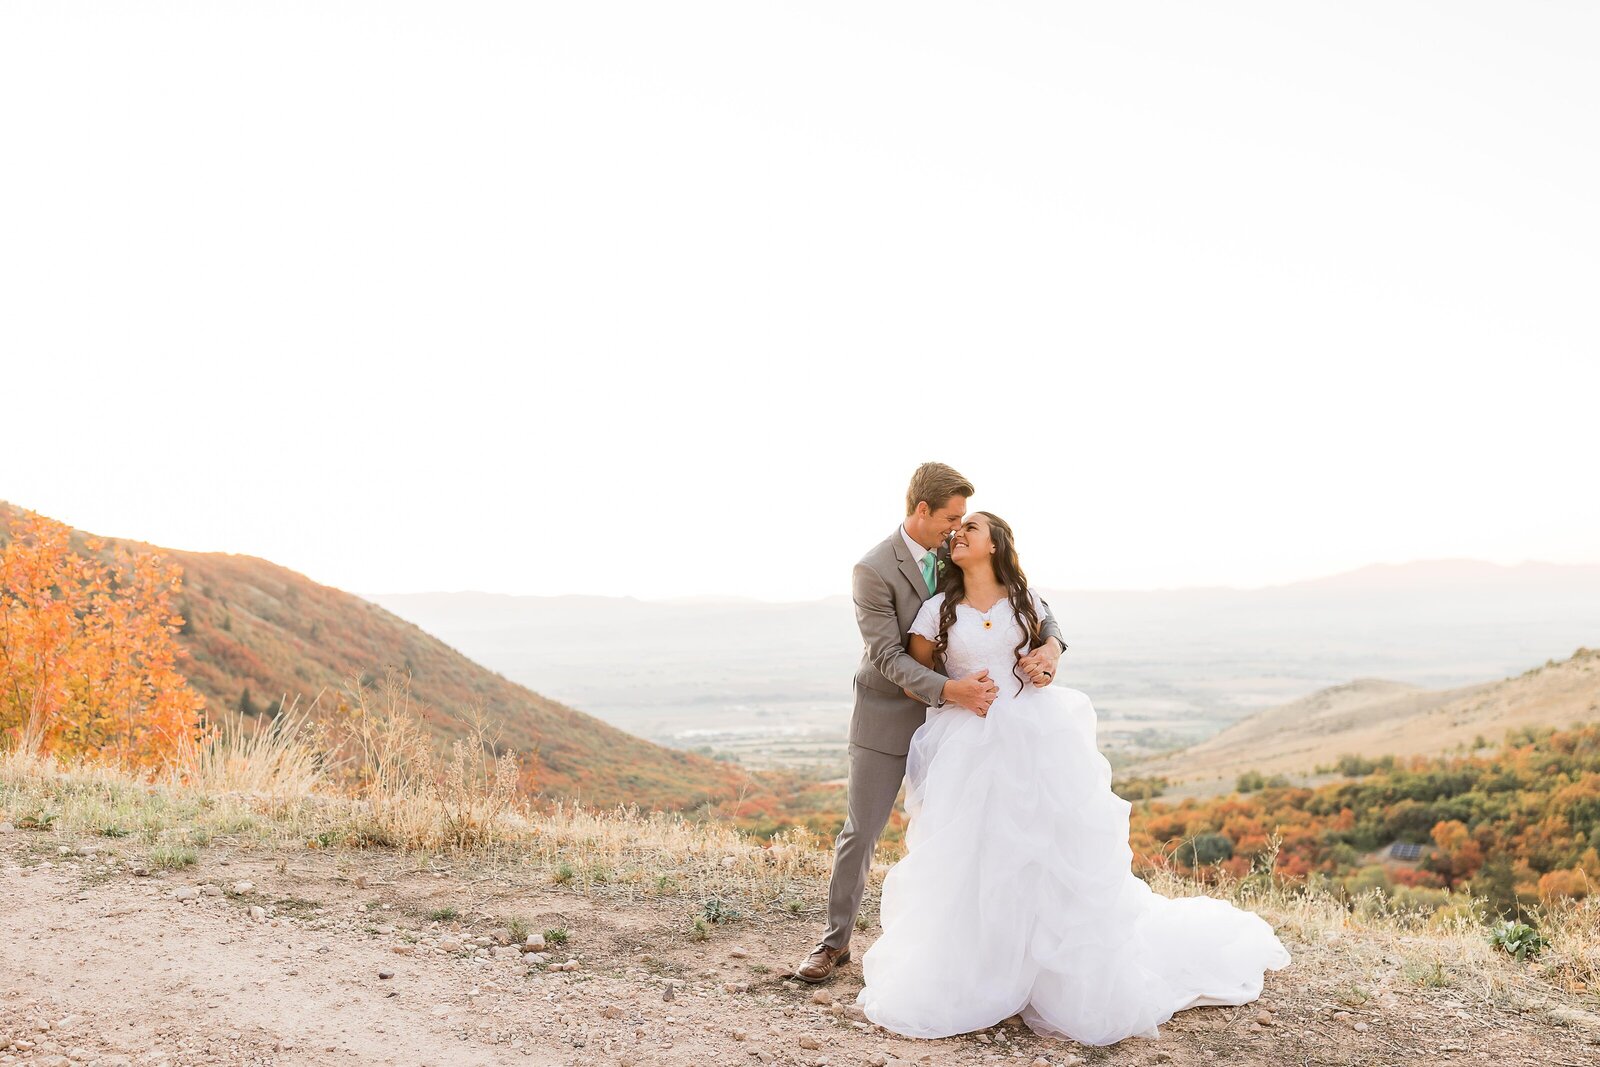 Cherry Peak ski resort wedding venue and canyon makes a beautiful backdrop for wedding photos.